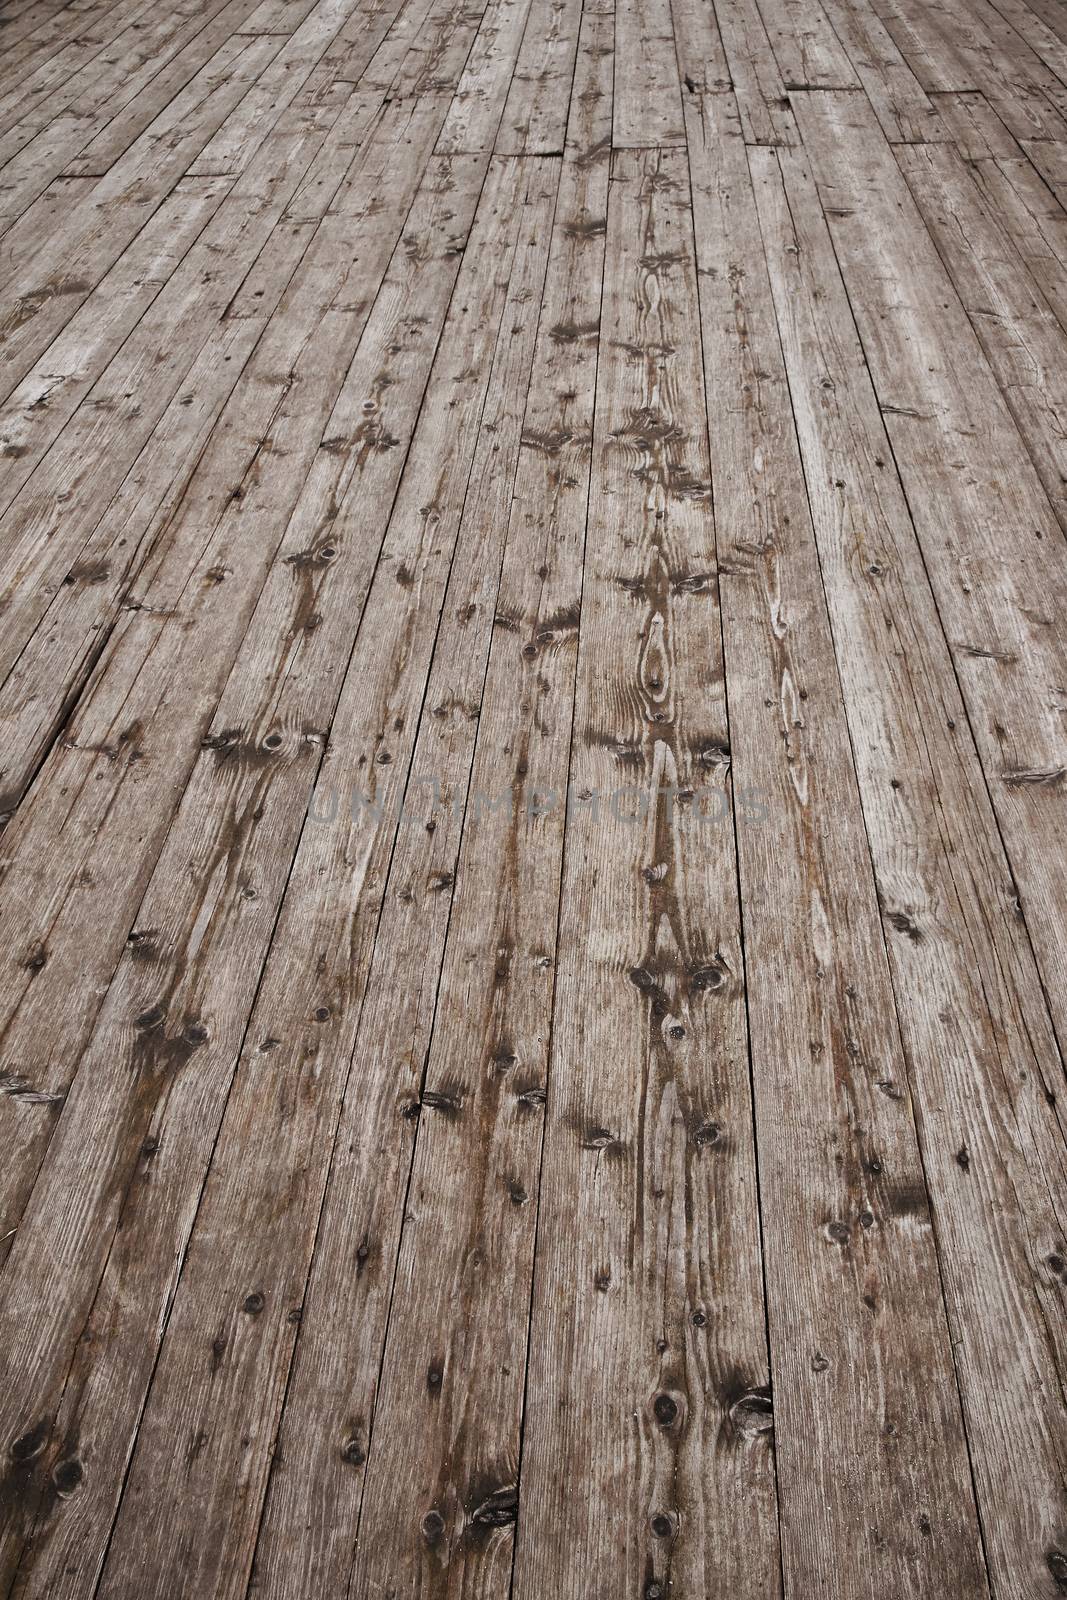 Vintage wooden planks floor surface in perspective by BreakingTheWalls